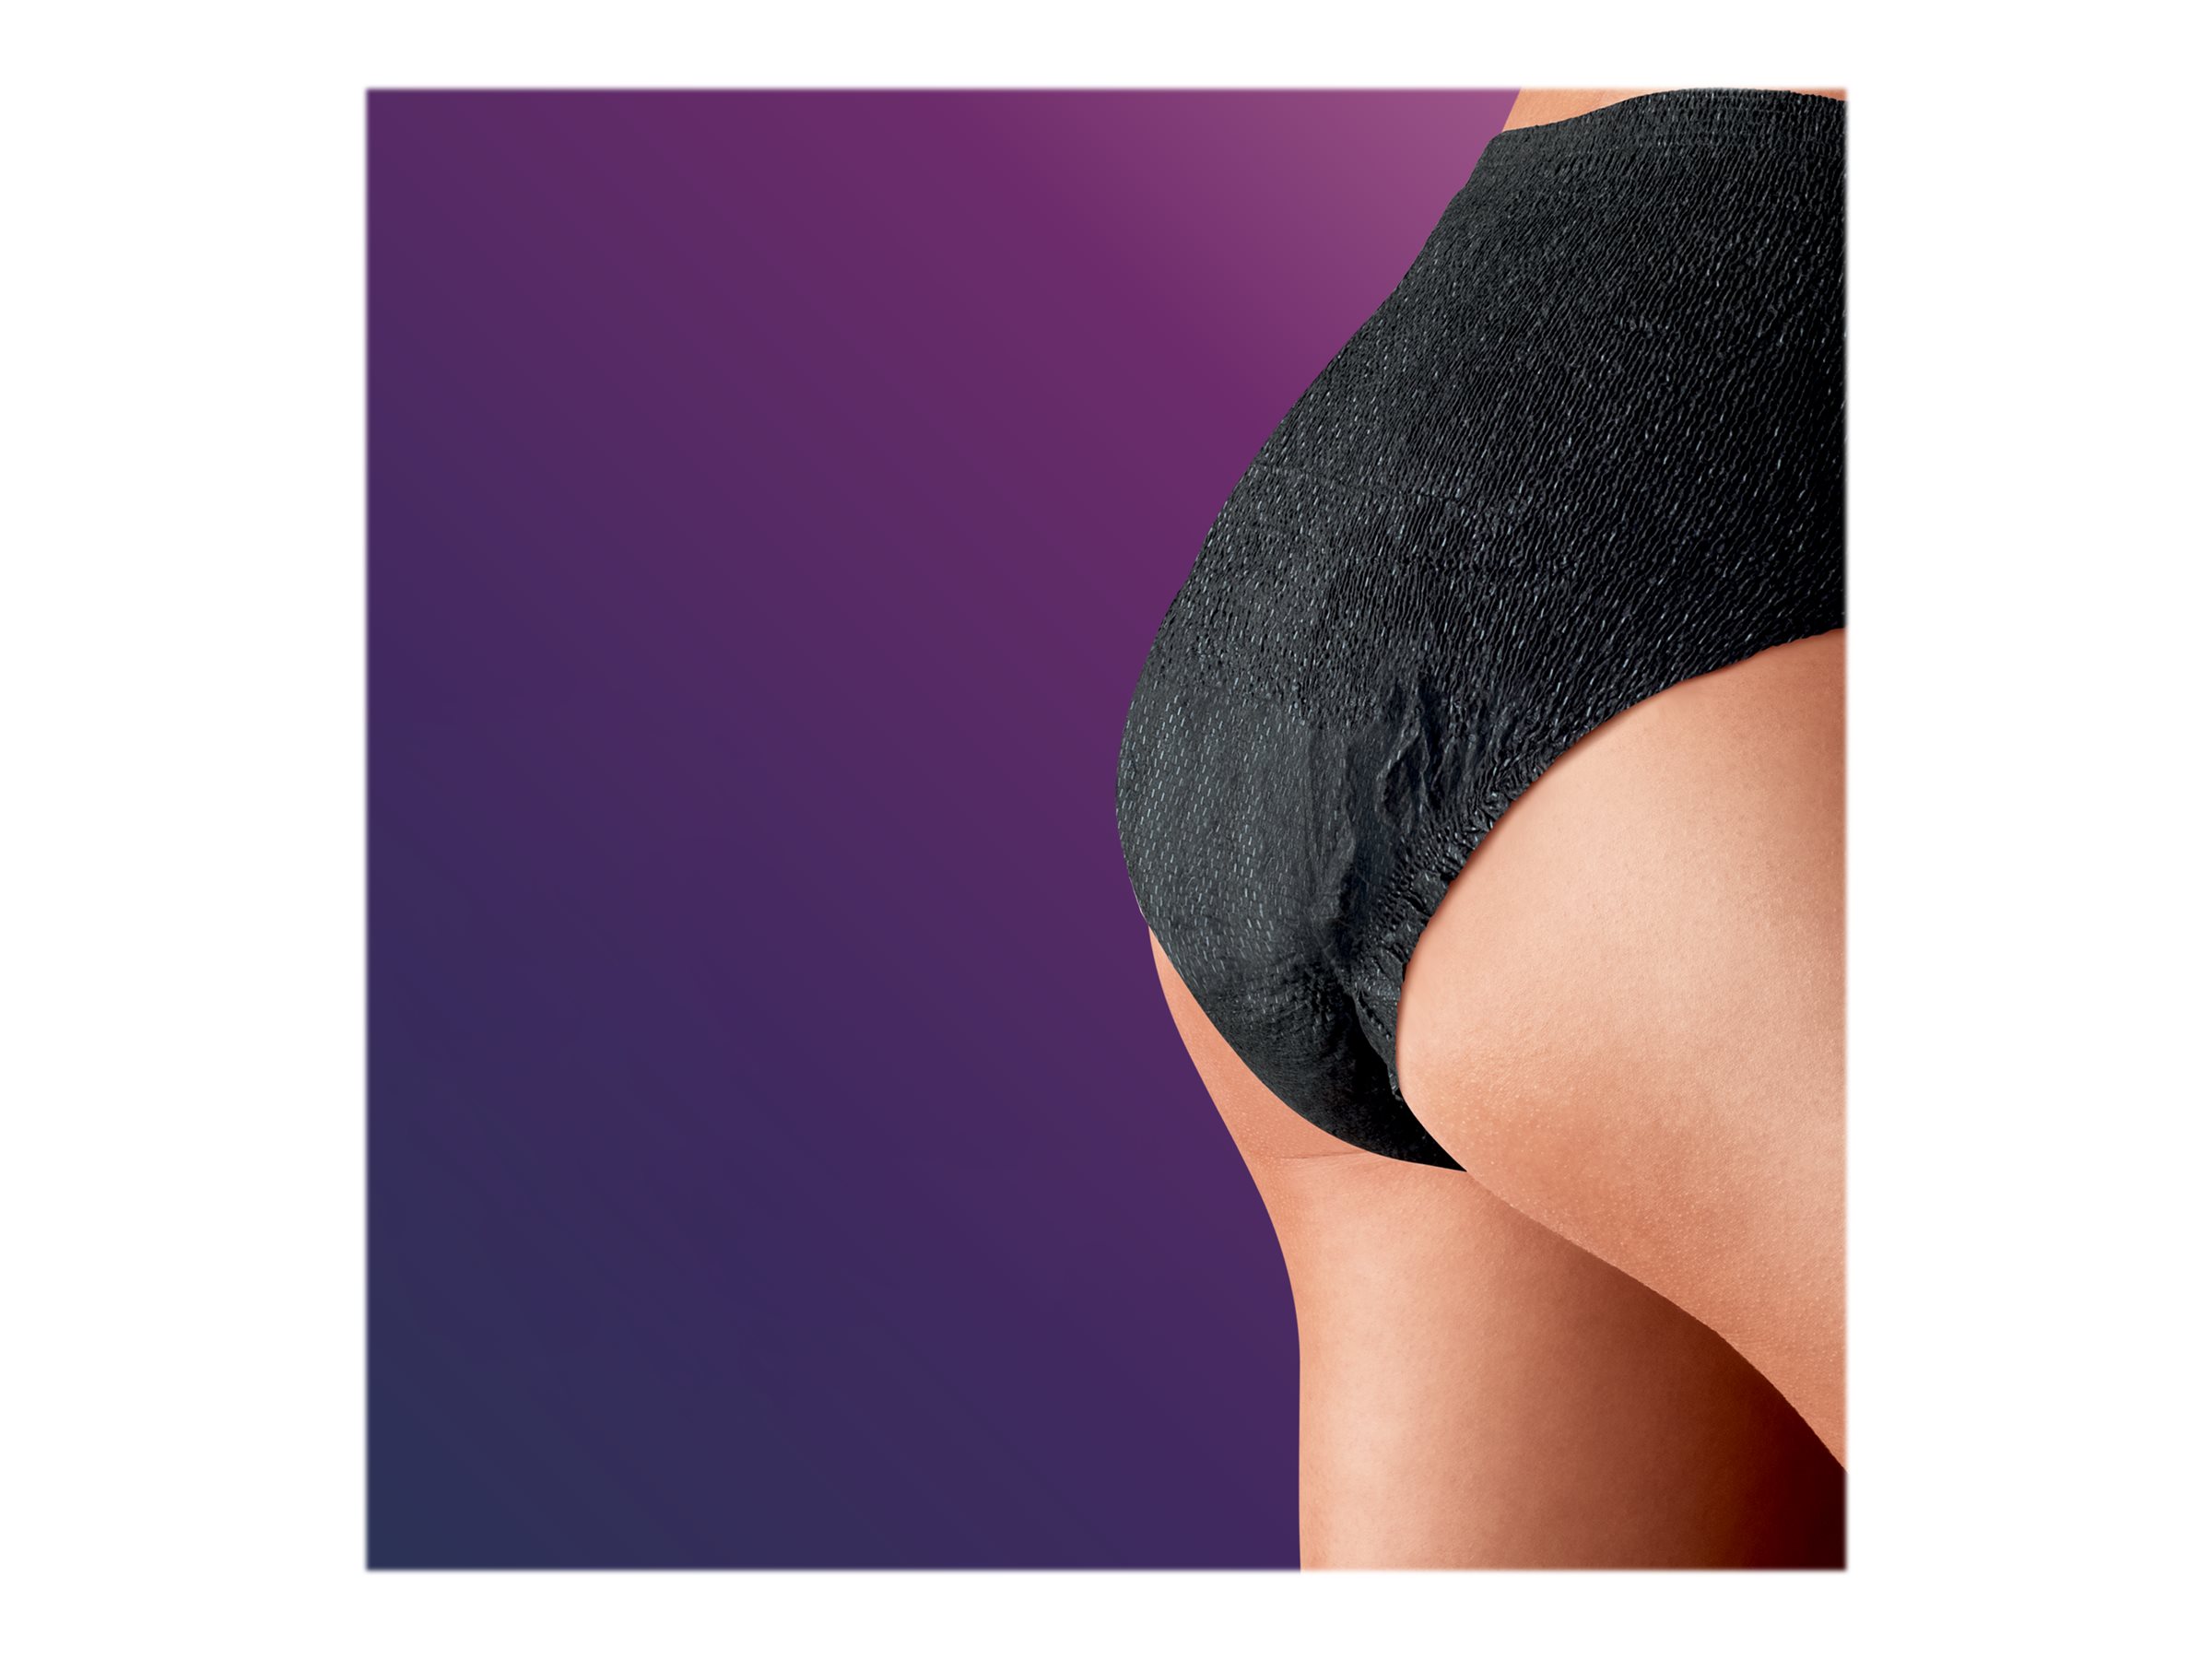 Tena Stylish Incontinence Protective Underwear for Women, Black